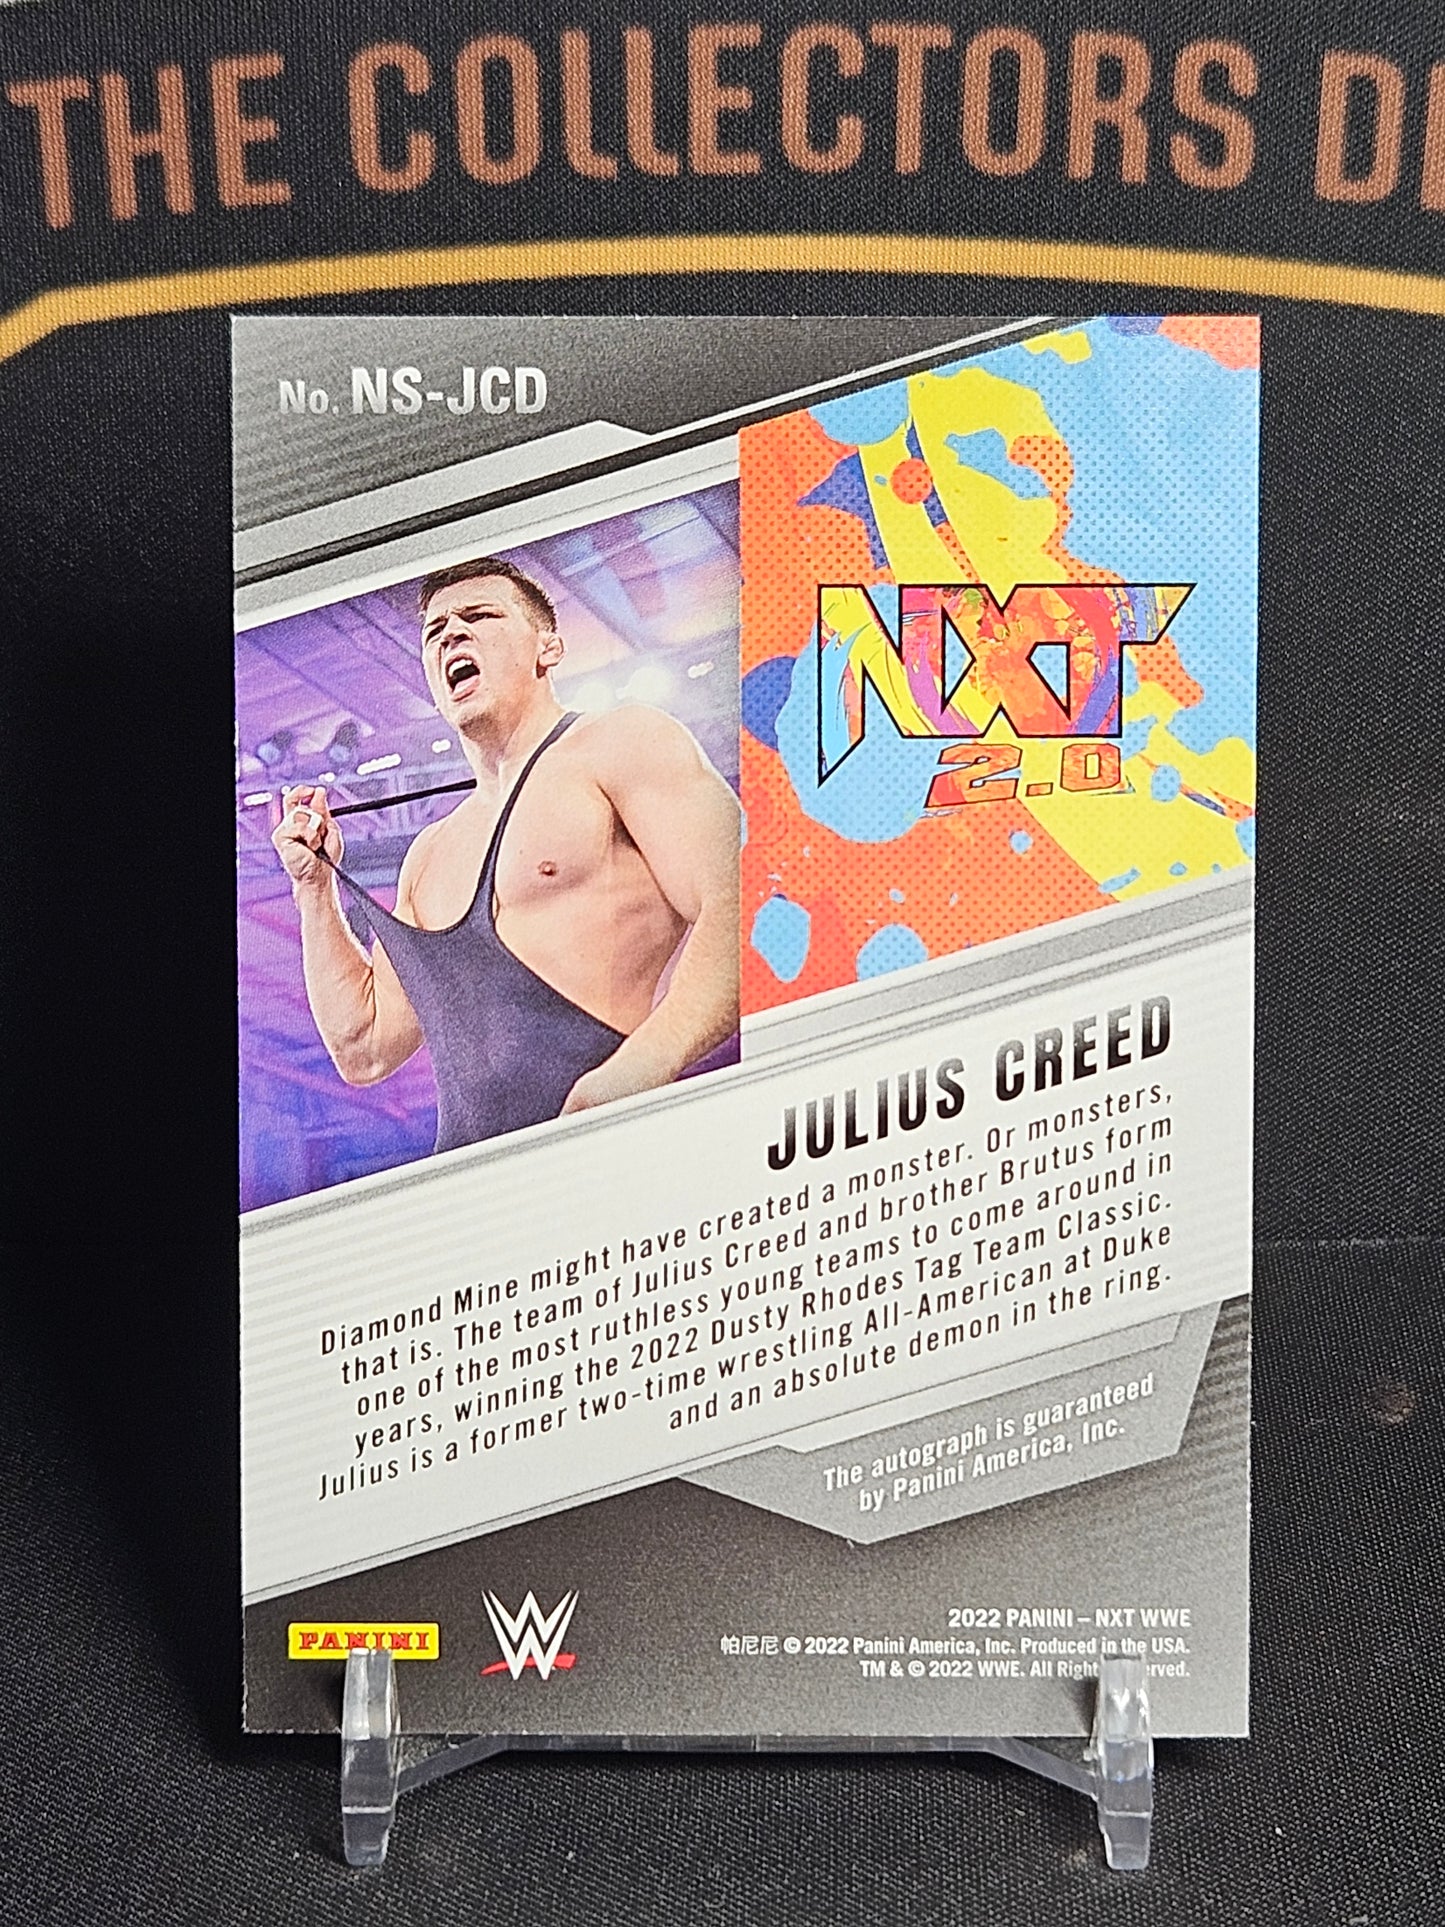 2022 Panini NXT WWE Julius Creed Signatures 17/25 On Card Autograph